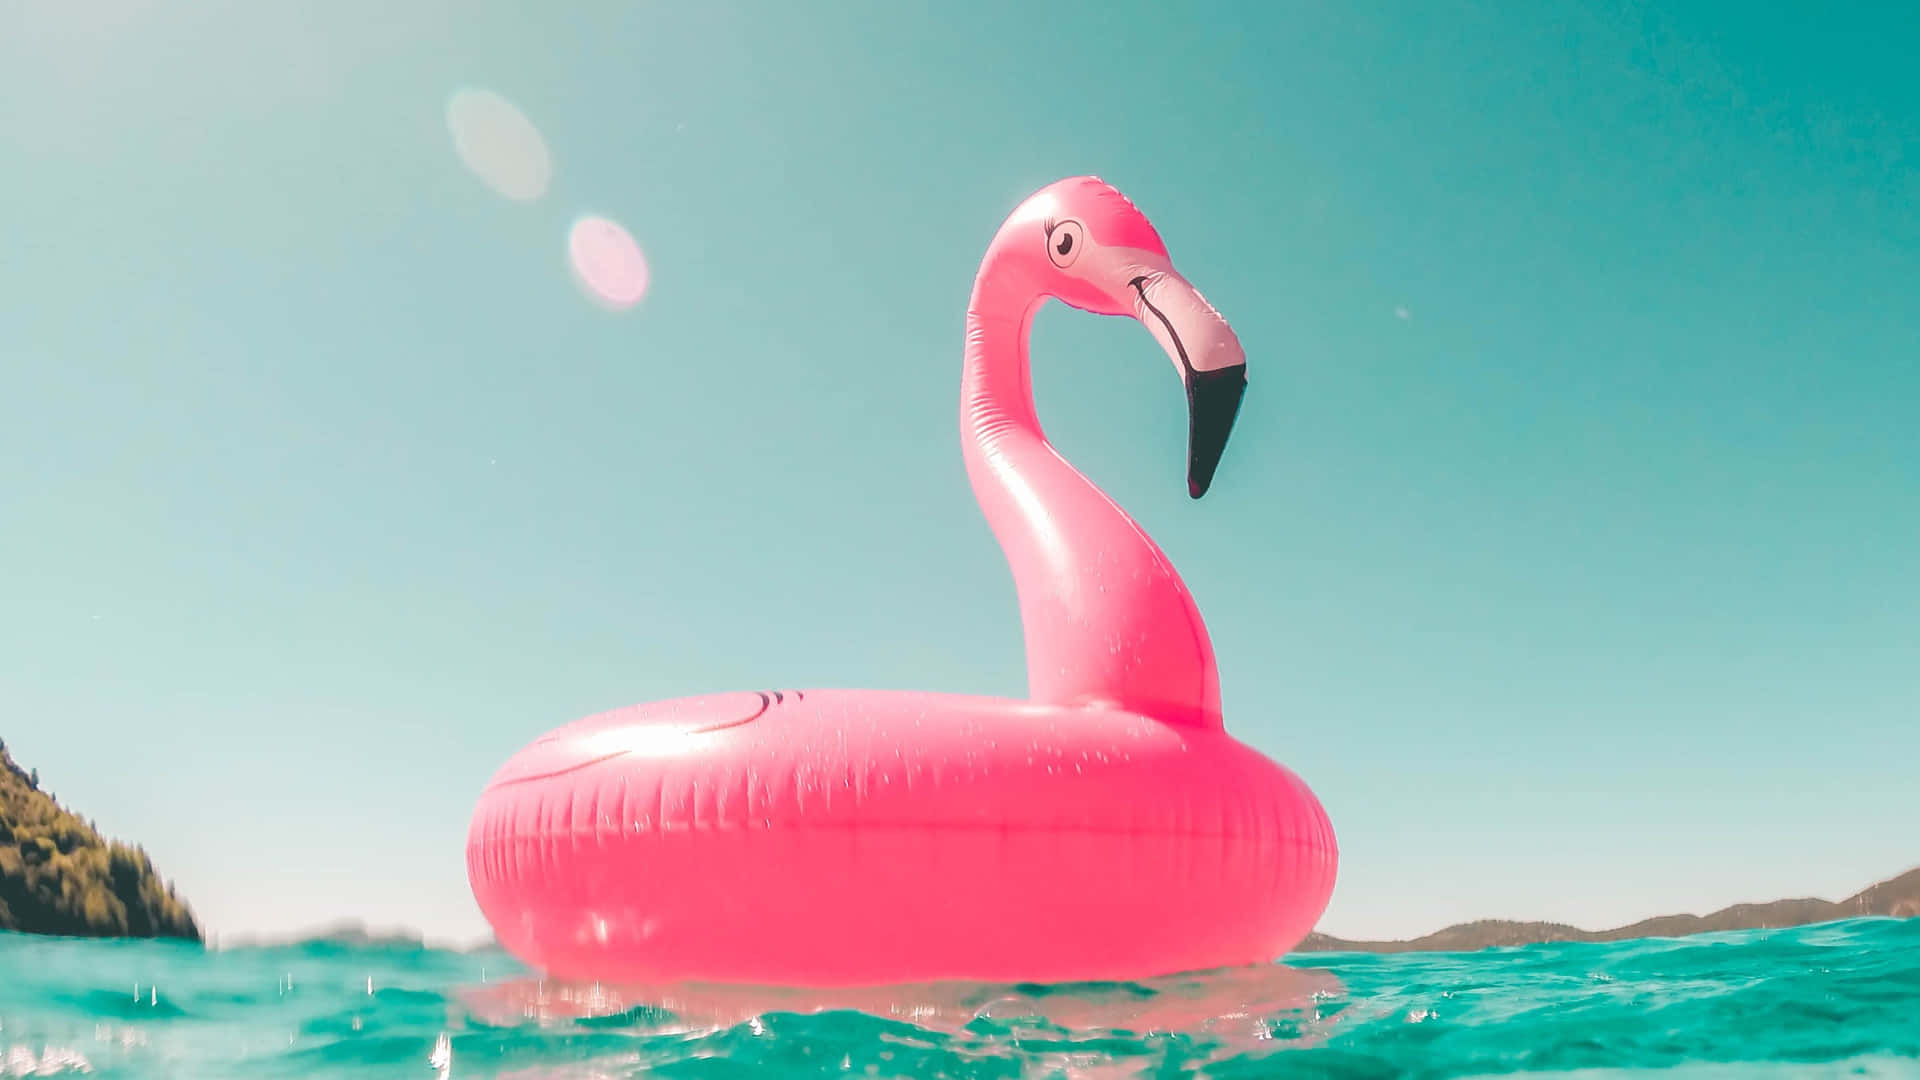 Aesthetic Summer Picture Flamingo Pool